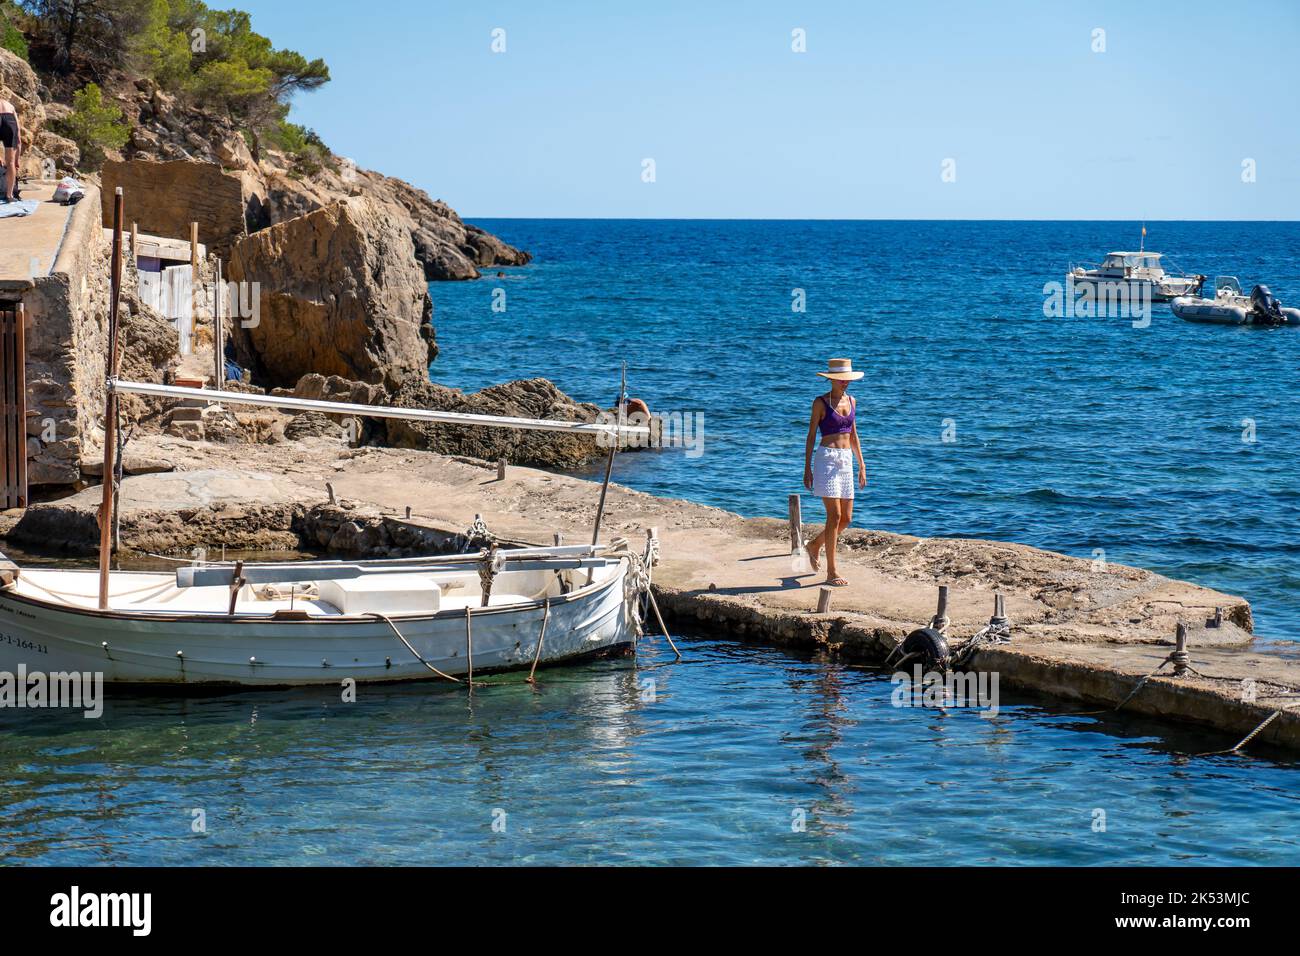 Woman walking on a pier in the mediterranean sea Stock Photo